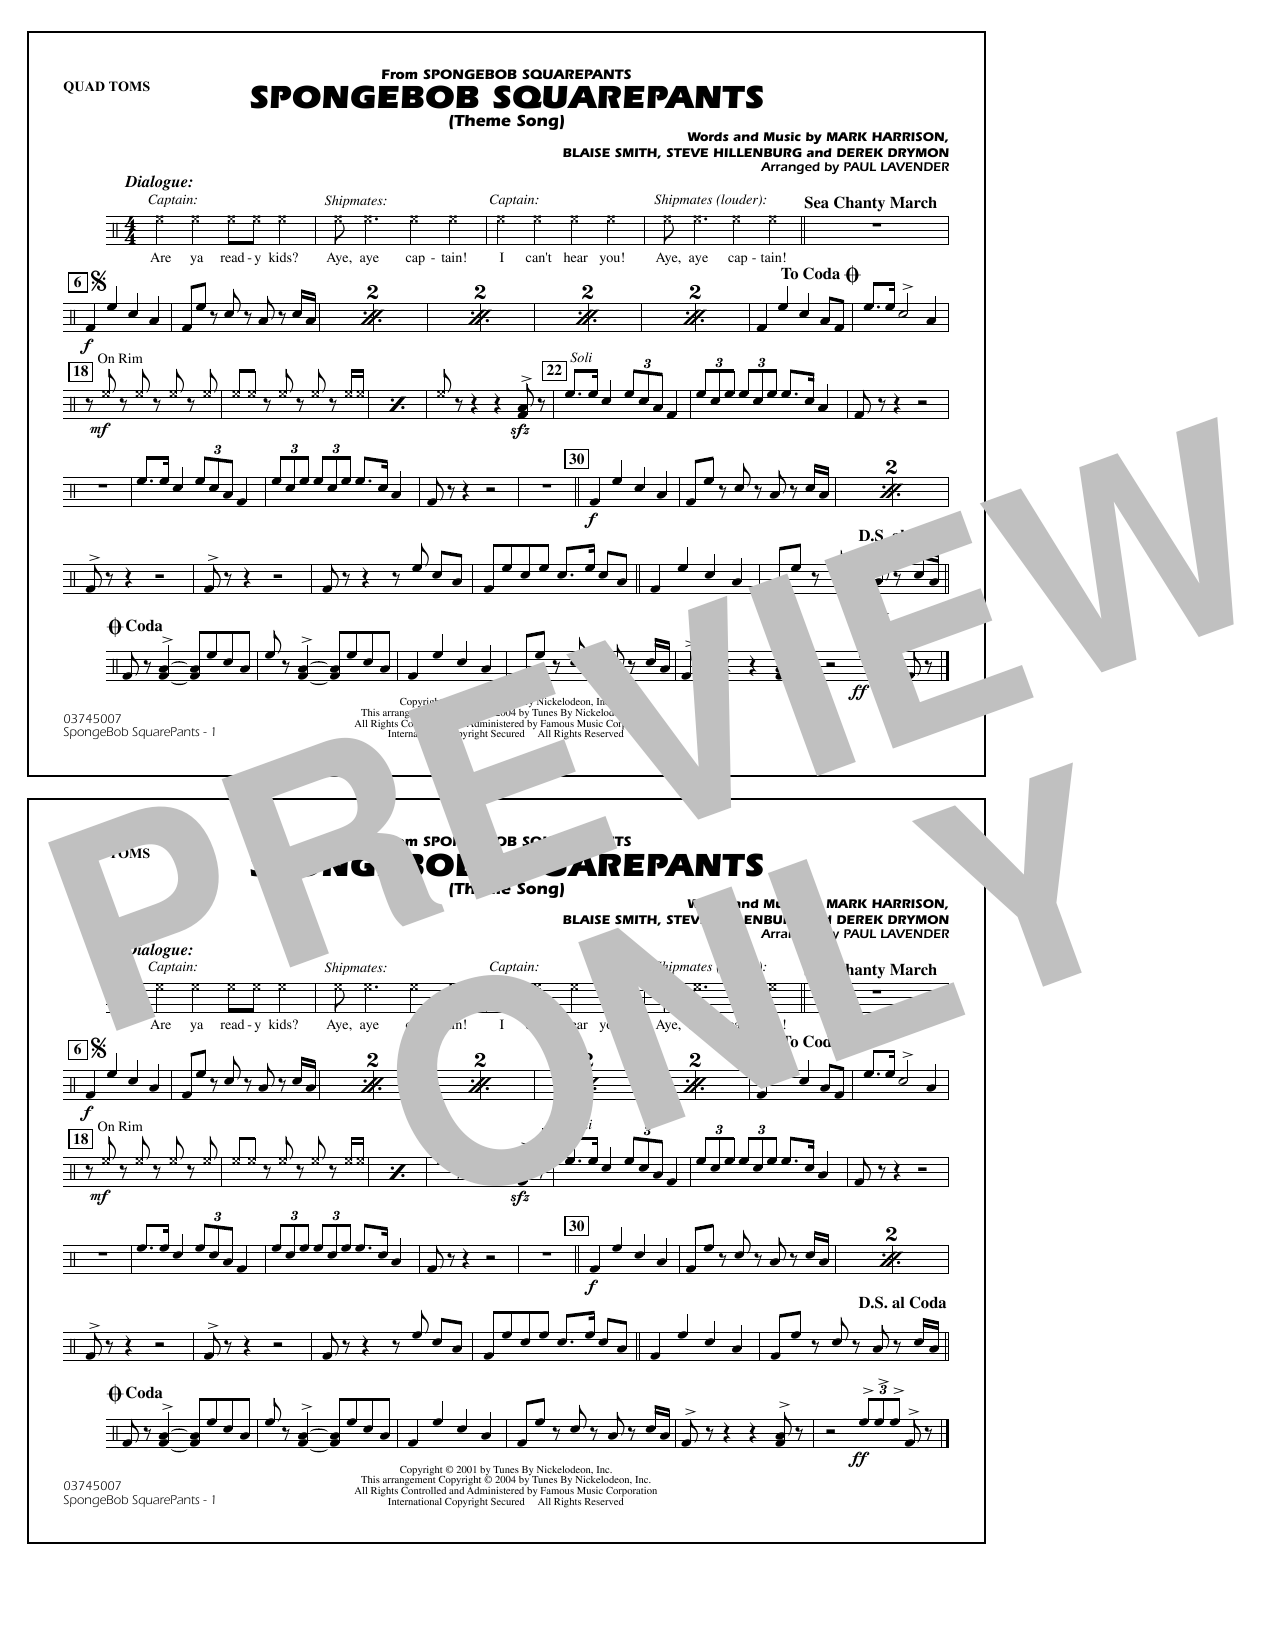 Steve Hillenburg Spongebob Squarepants (Theme Song) (arr. Paul Lavender) - Quad Toms Sheet Music Notes & Chords for Marching Band - Download or Print PDF